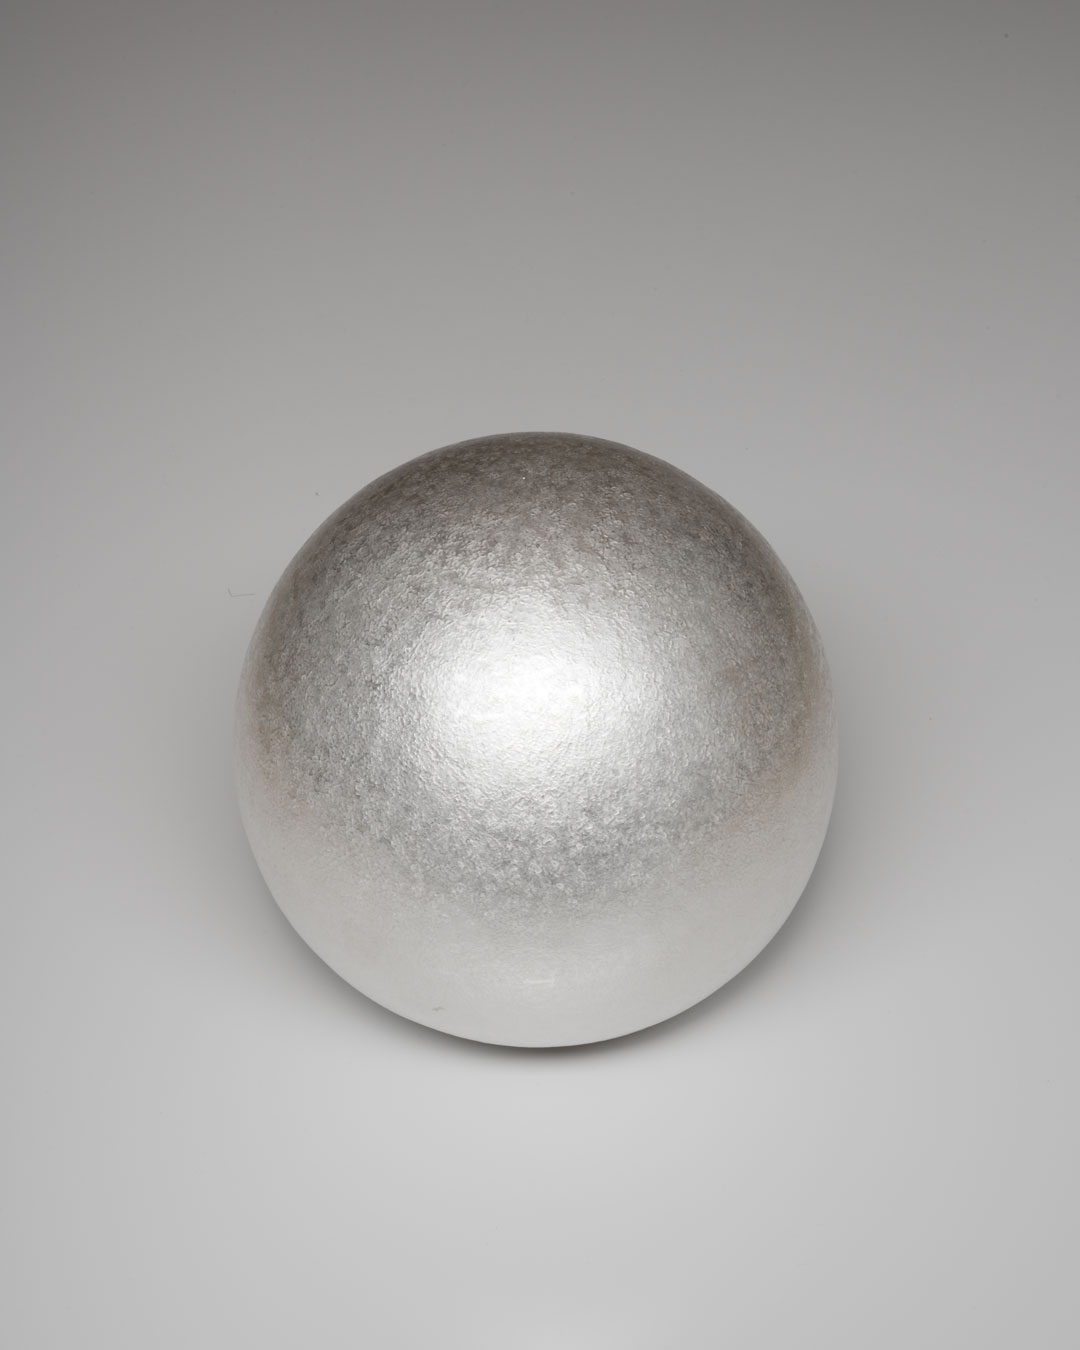 David Huycke, White Moon, 2012, object; zilver 925/1000 - 723 gram, 165 x 165 x 165 mm, €4500 (afbeelding 1 van 2)